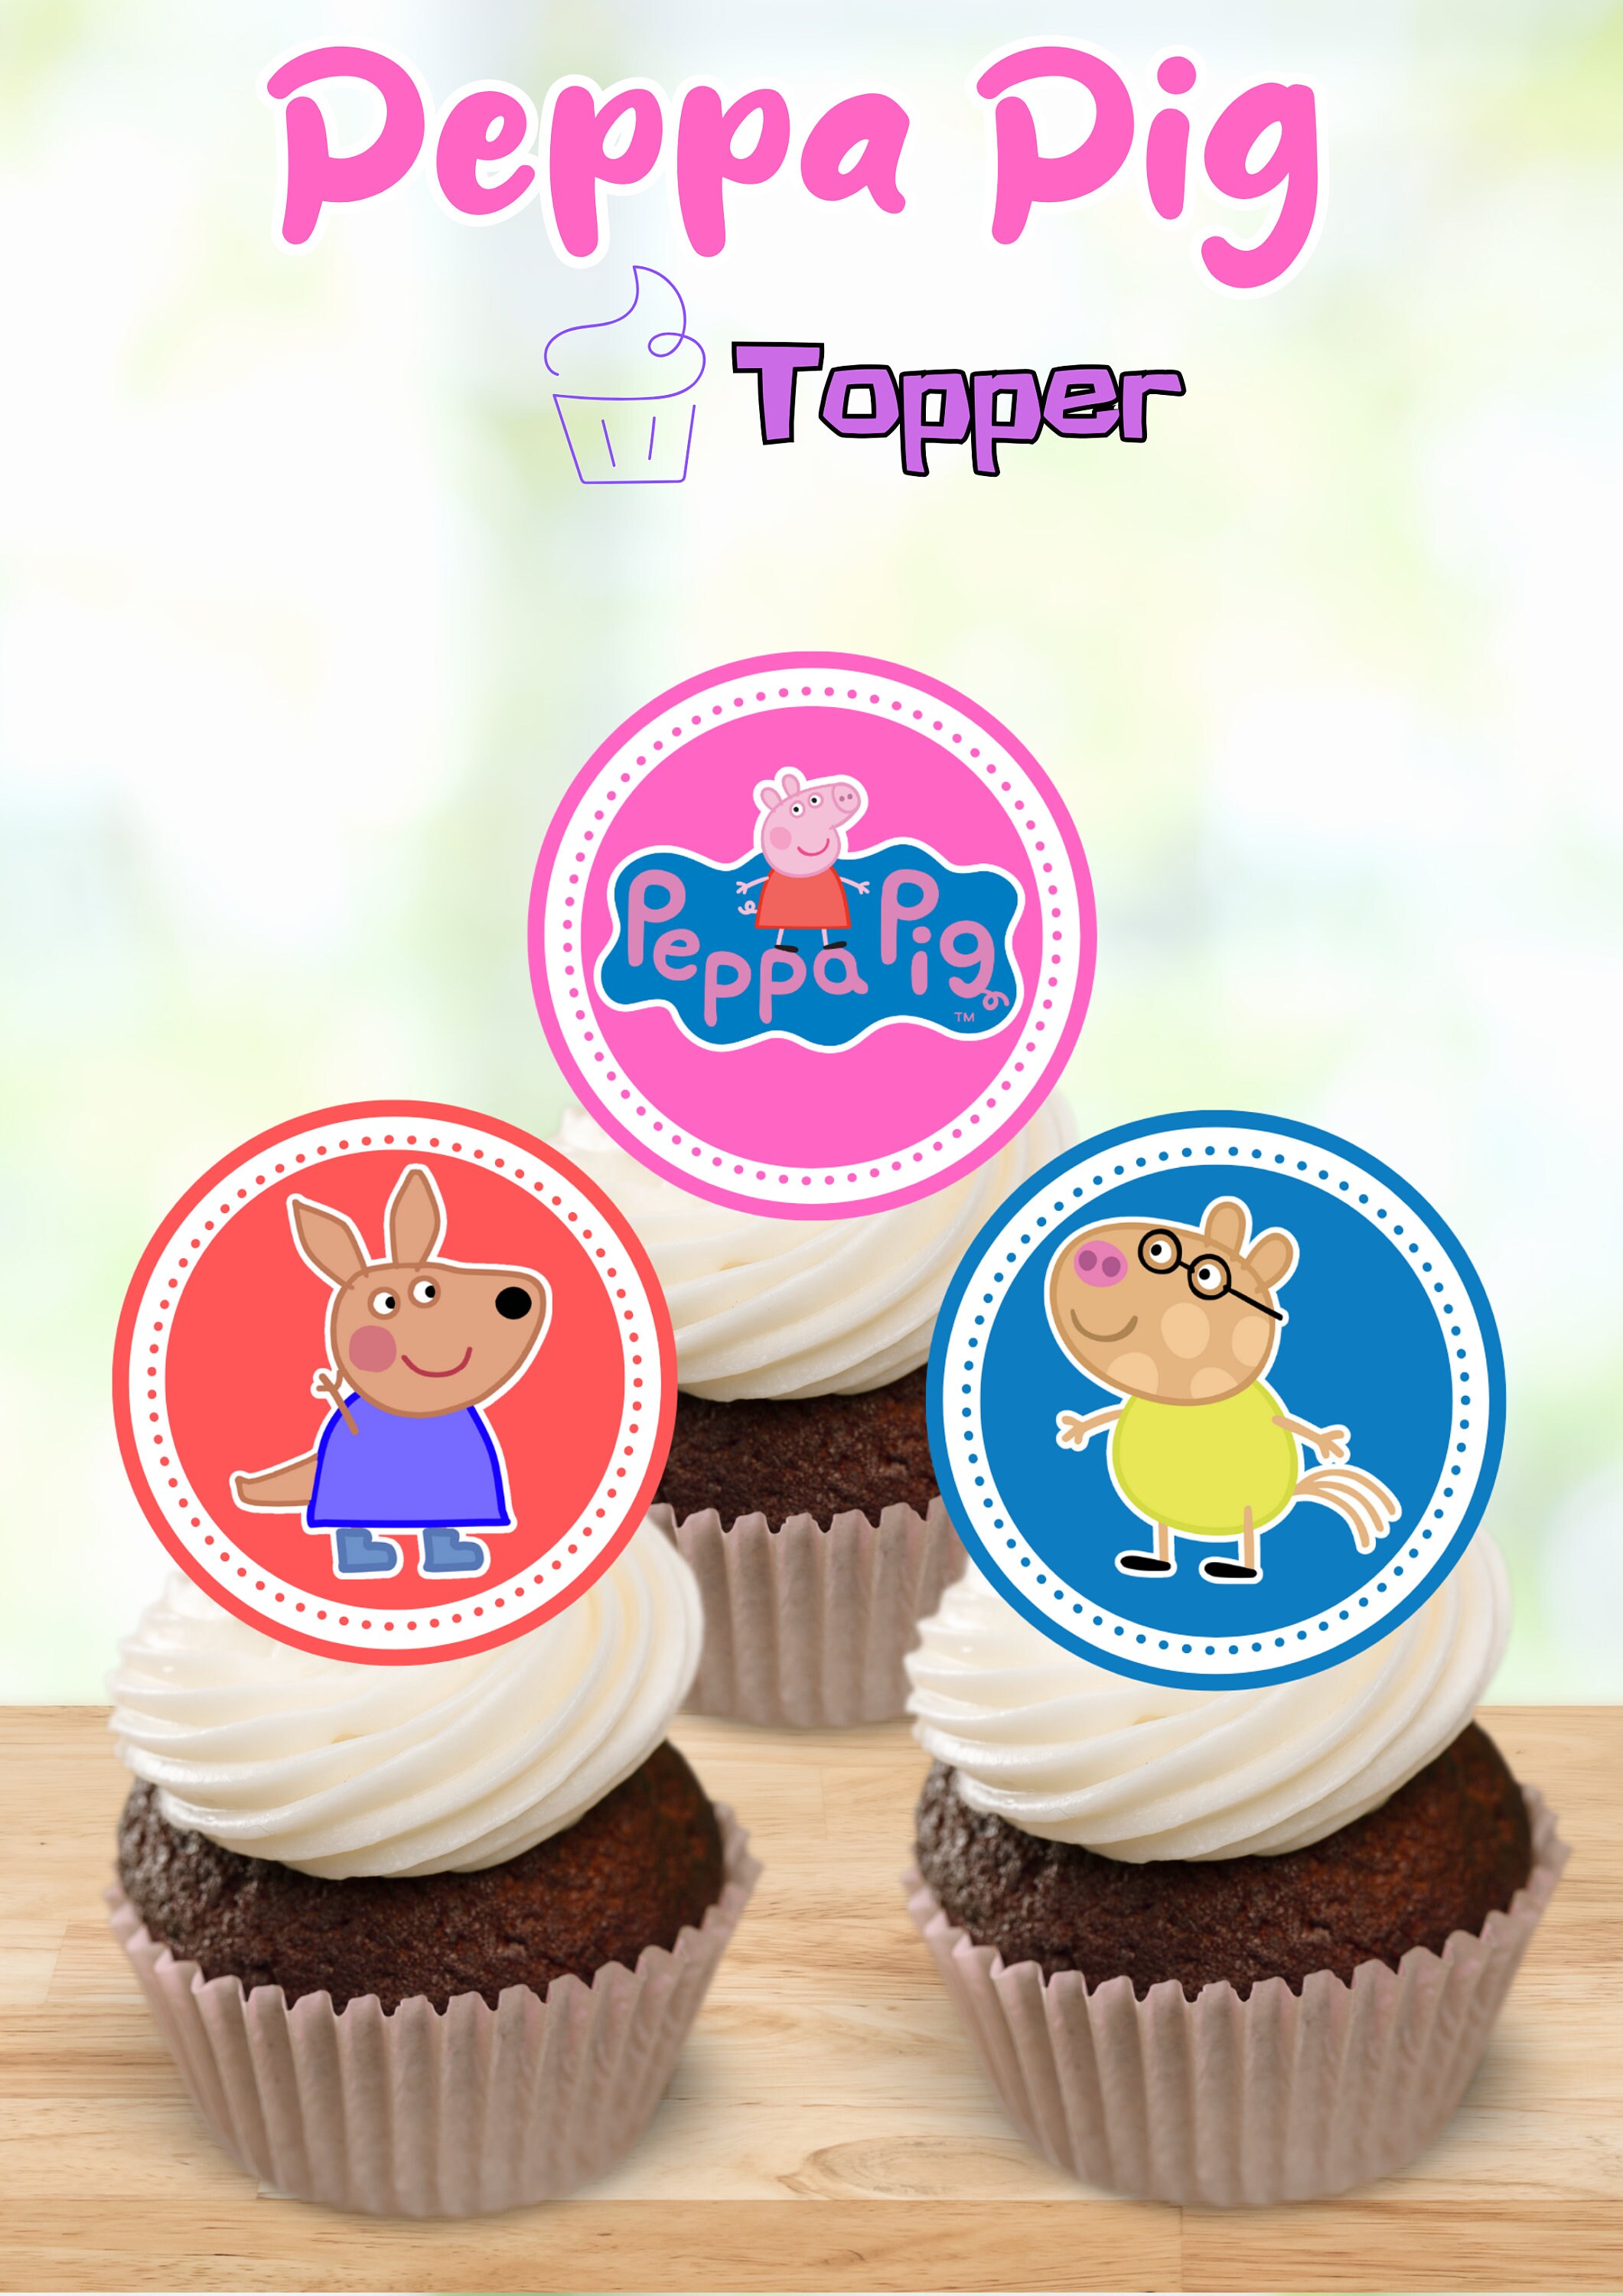 Peppa Pig Cupcake Toppers imprimibles: selecciones de cupcake, pegatinas -   España